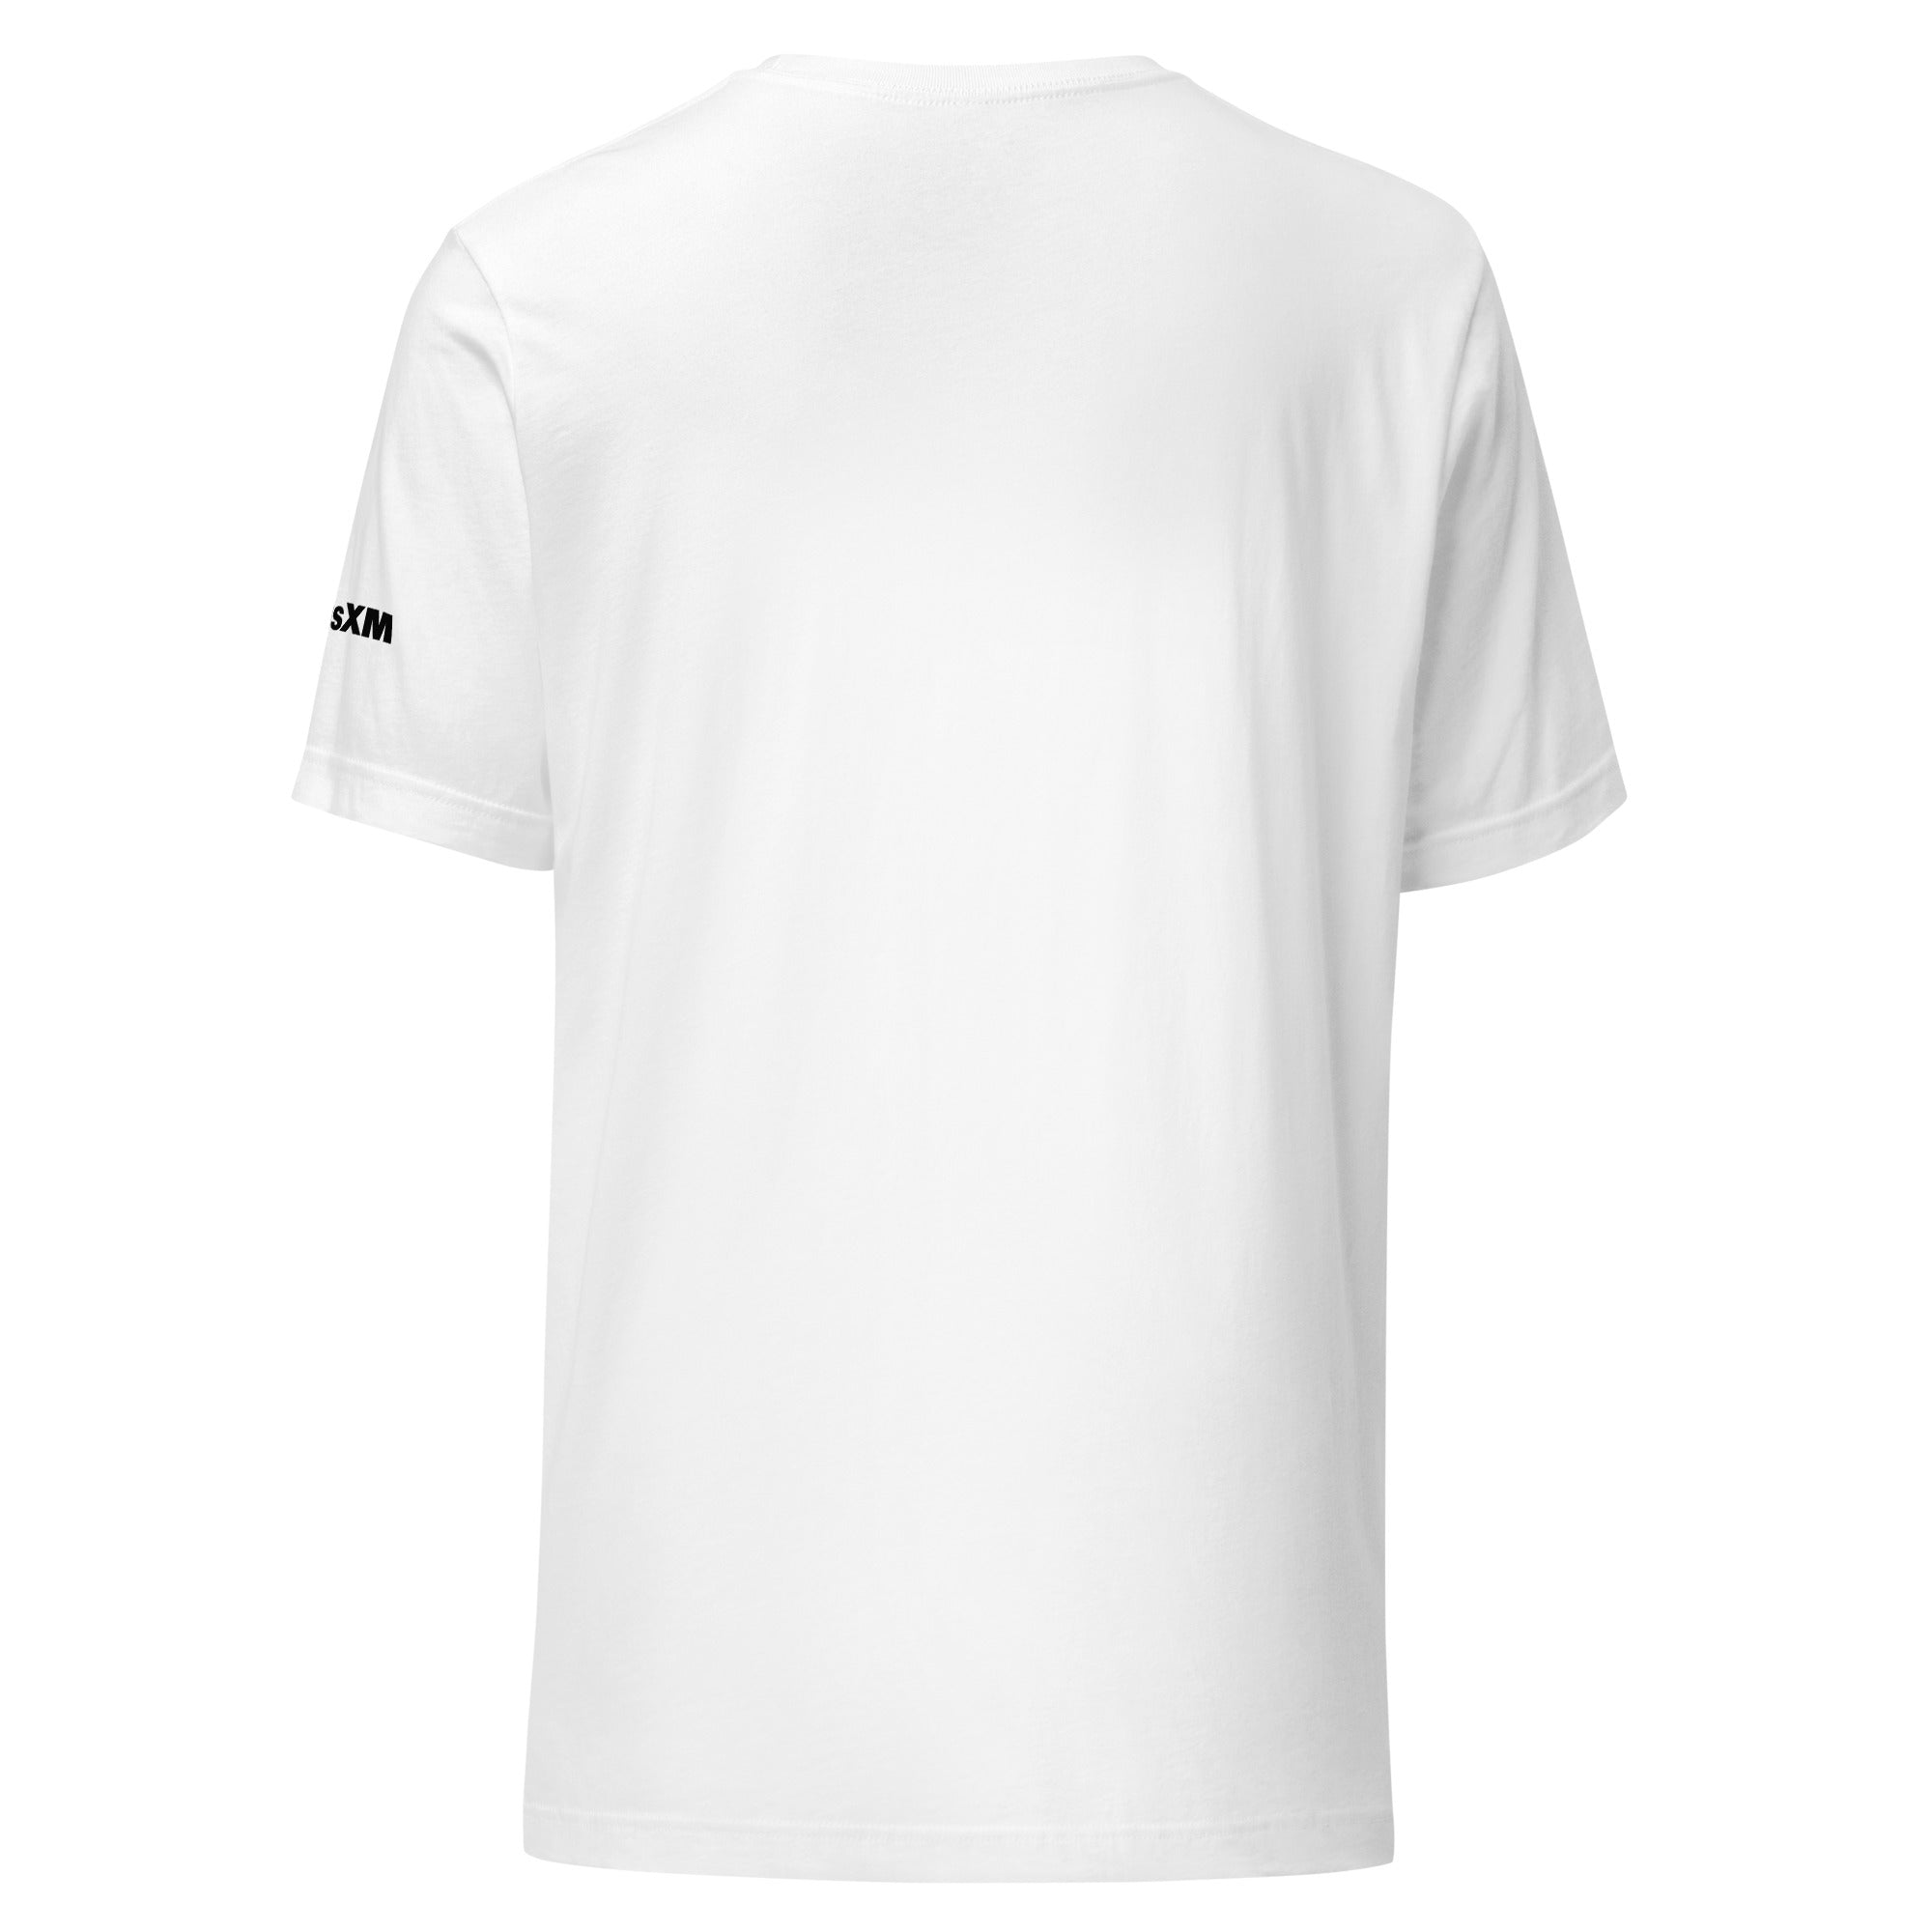 SiriusXM Silk: T-shirt (White)